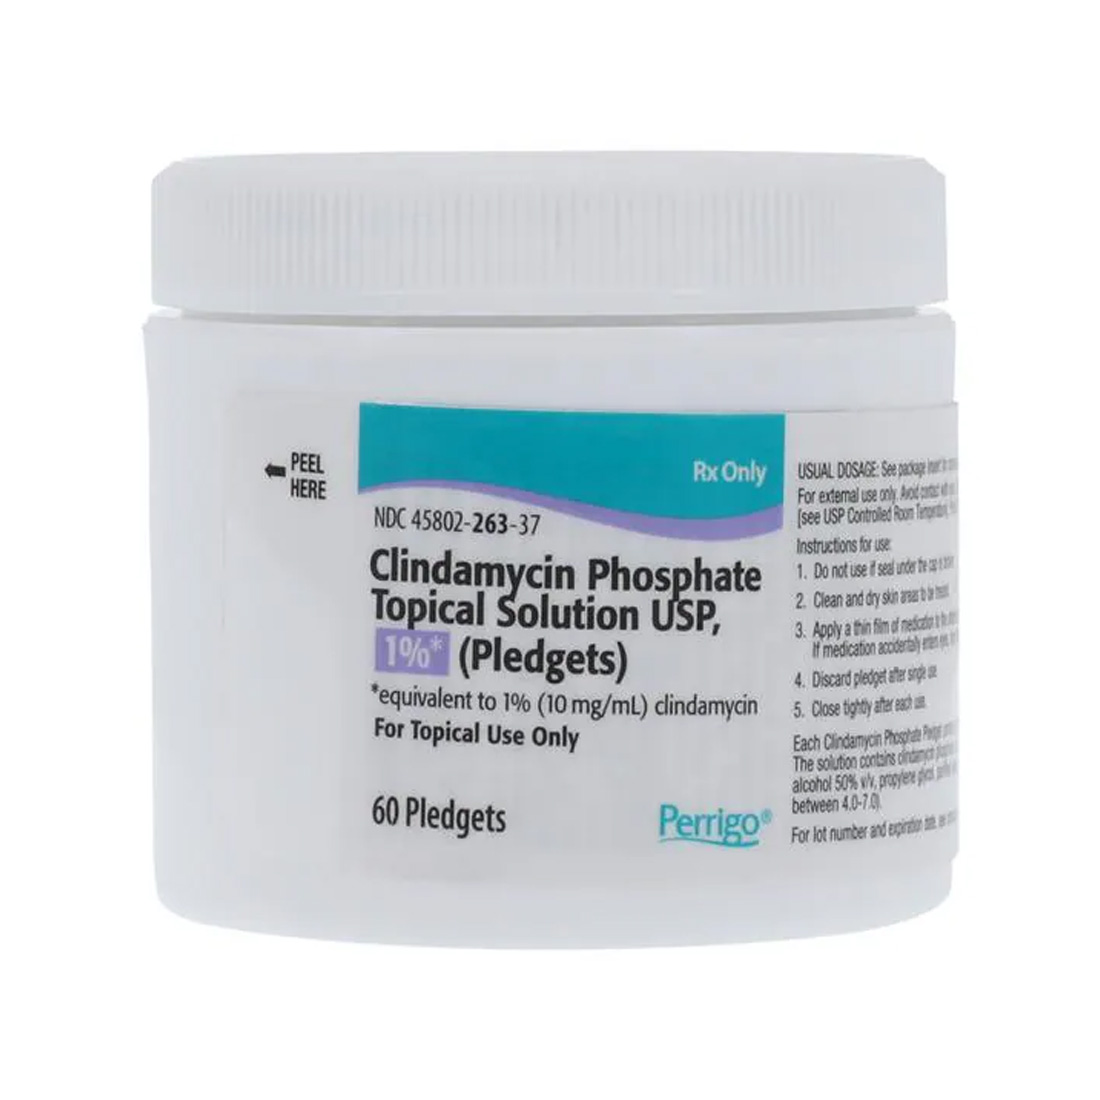 Clindamycin Phosphate Topical Solution, 1% (Pledgets) - 60/Jar